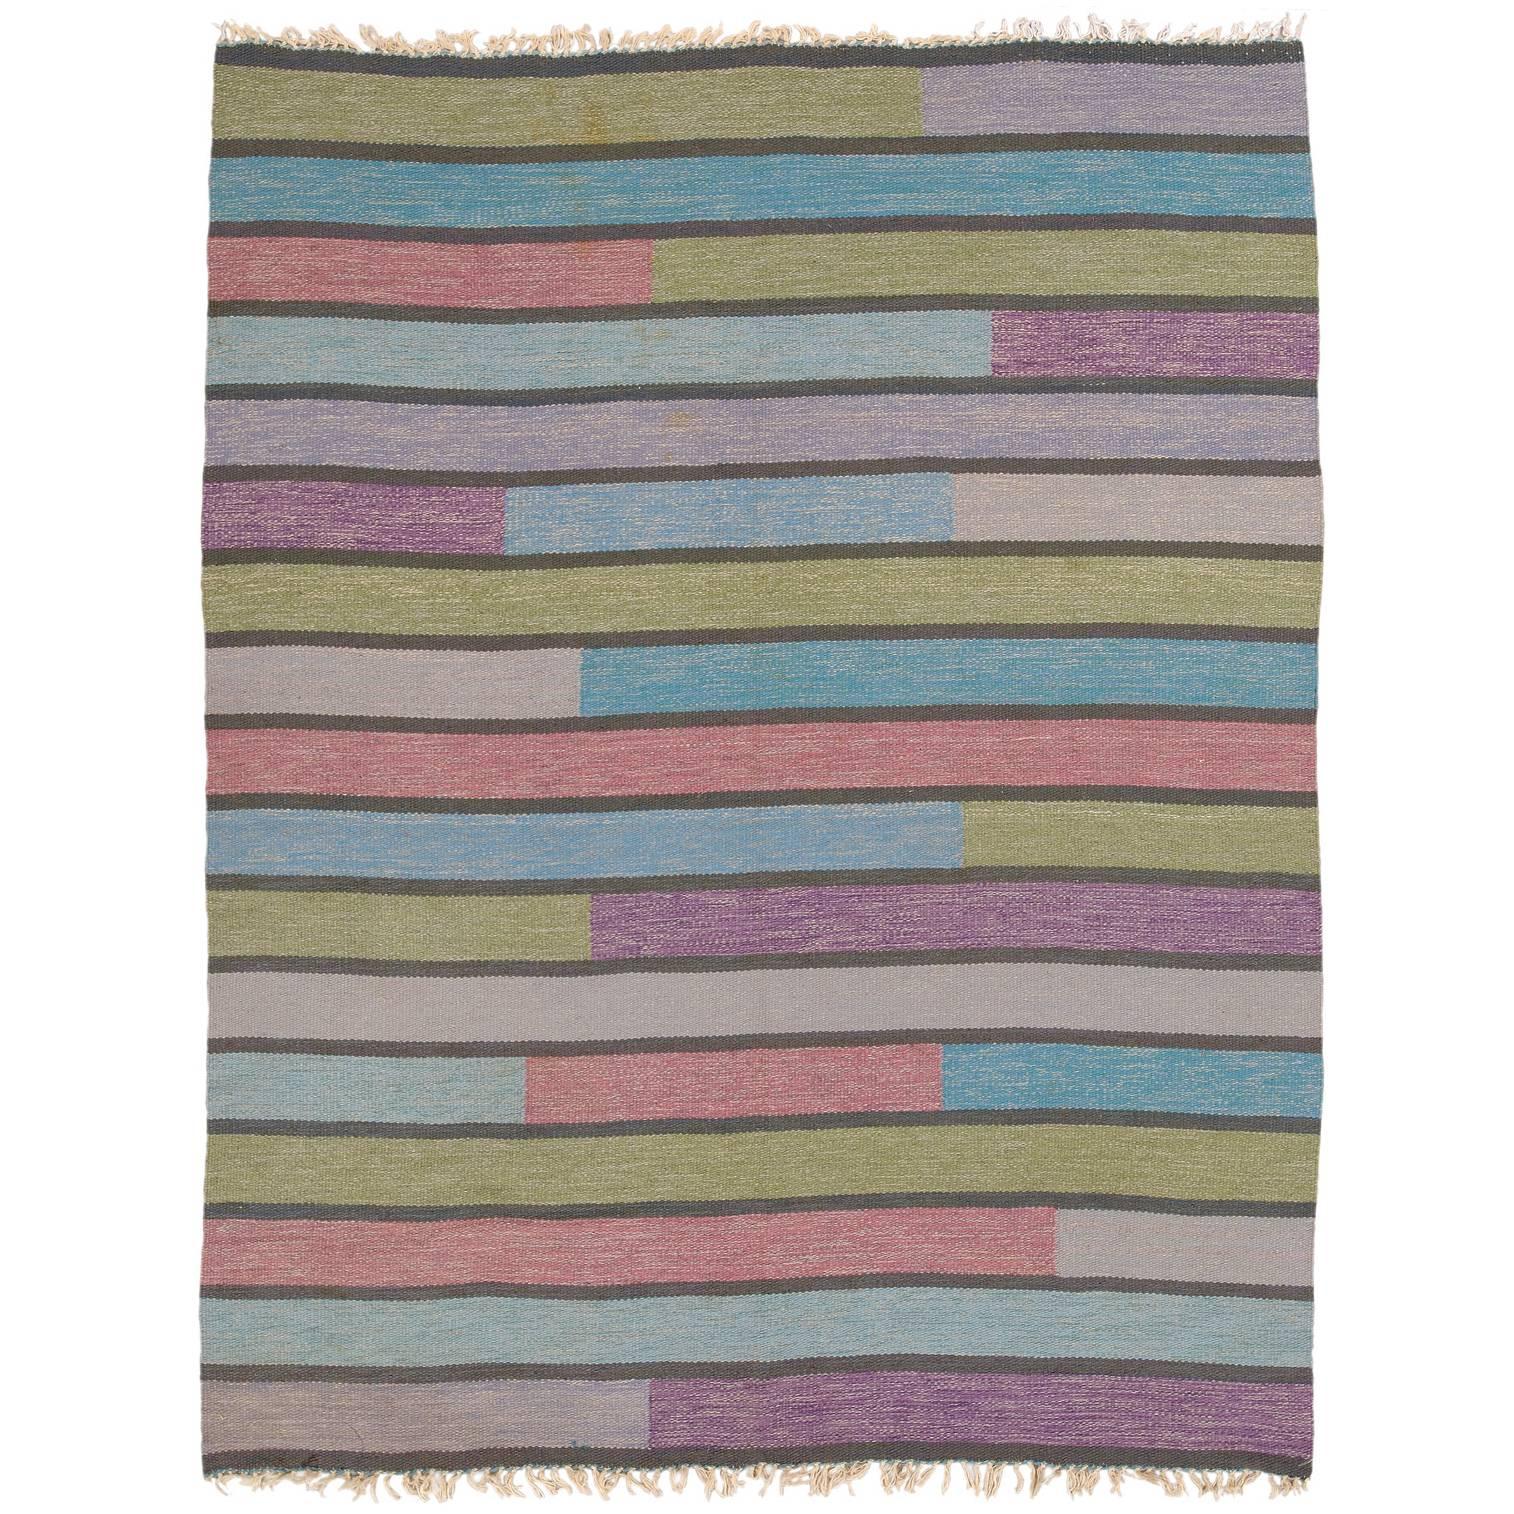 20th Century Swedish Flat-Weave Carpet by Ingrid Hellman-Knafve